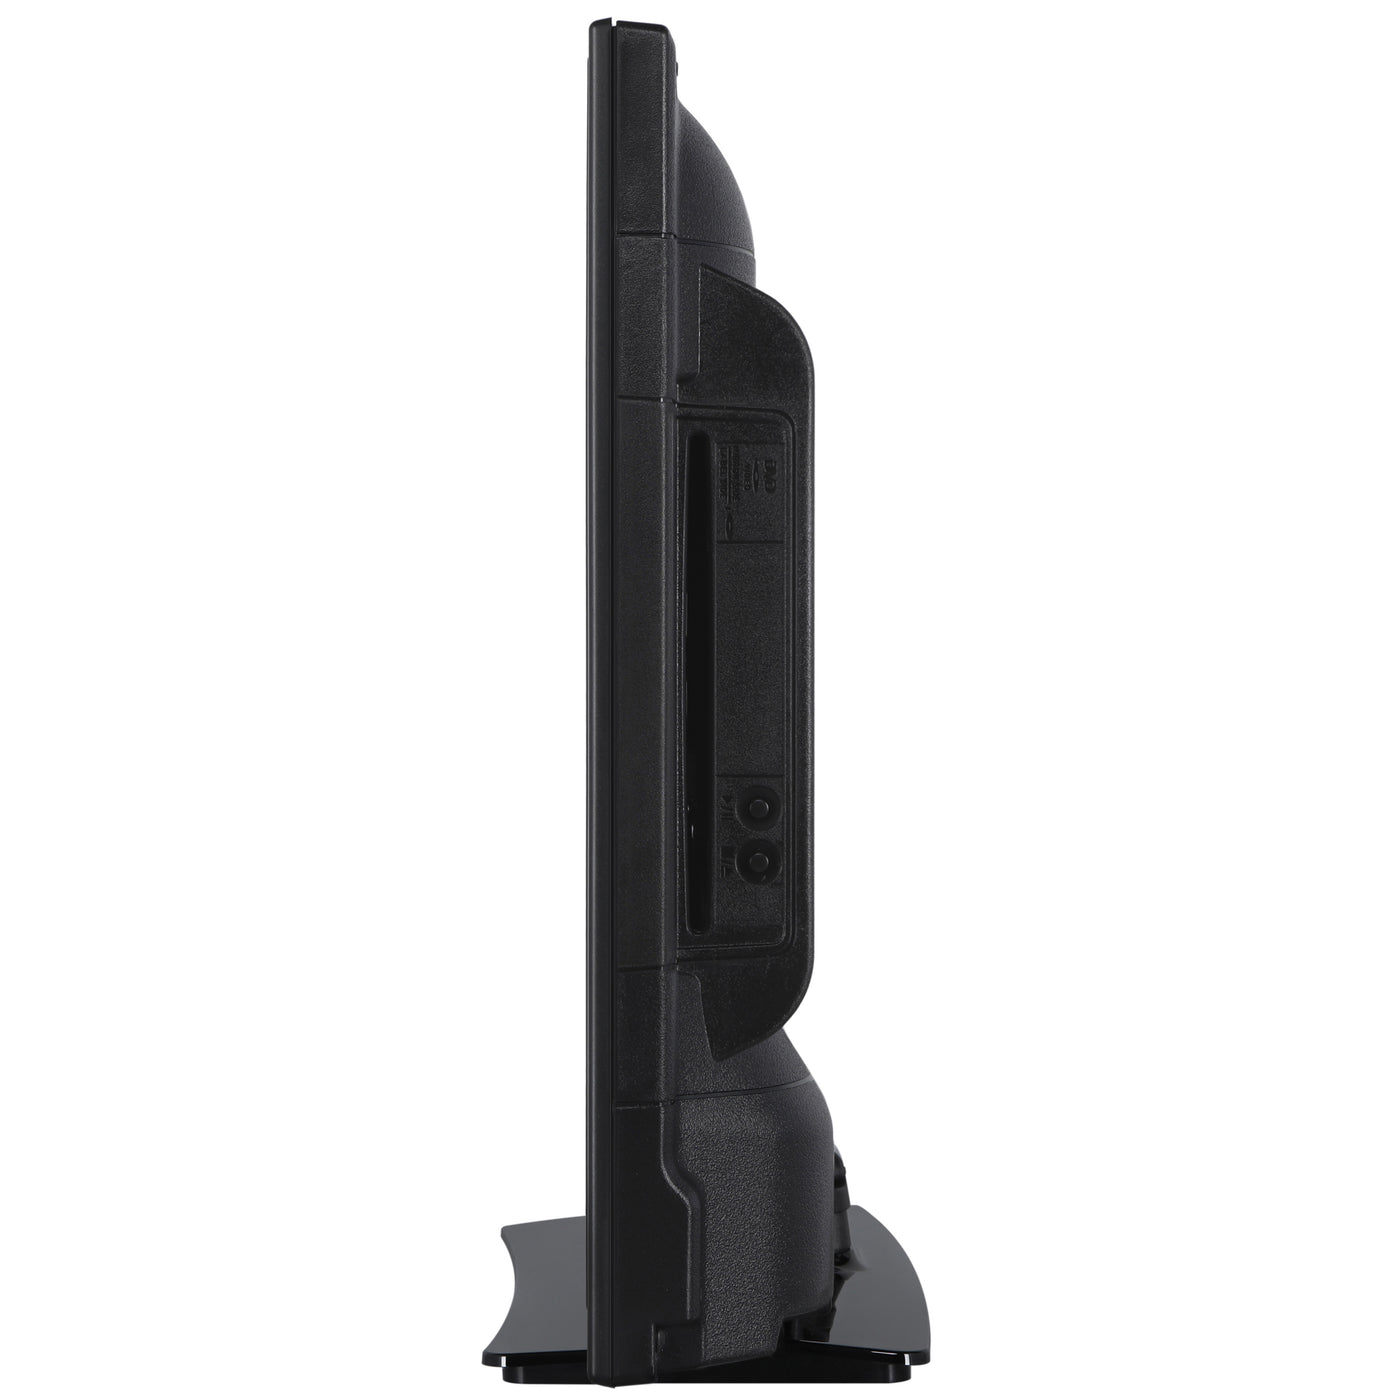 Lenco DVL-2483BK - 24-Zoll Smart-TV mit integrierter DVD-Player und 12-V-Kfz-Adapter, schwarz